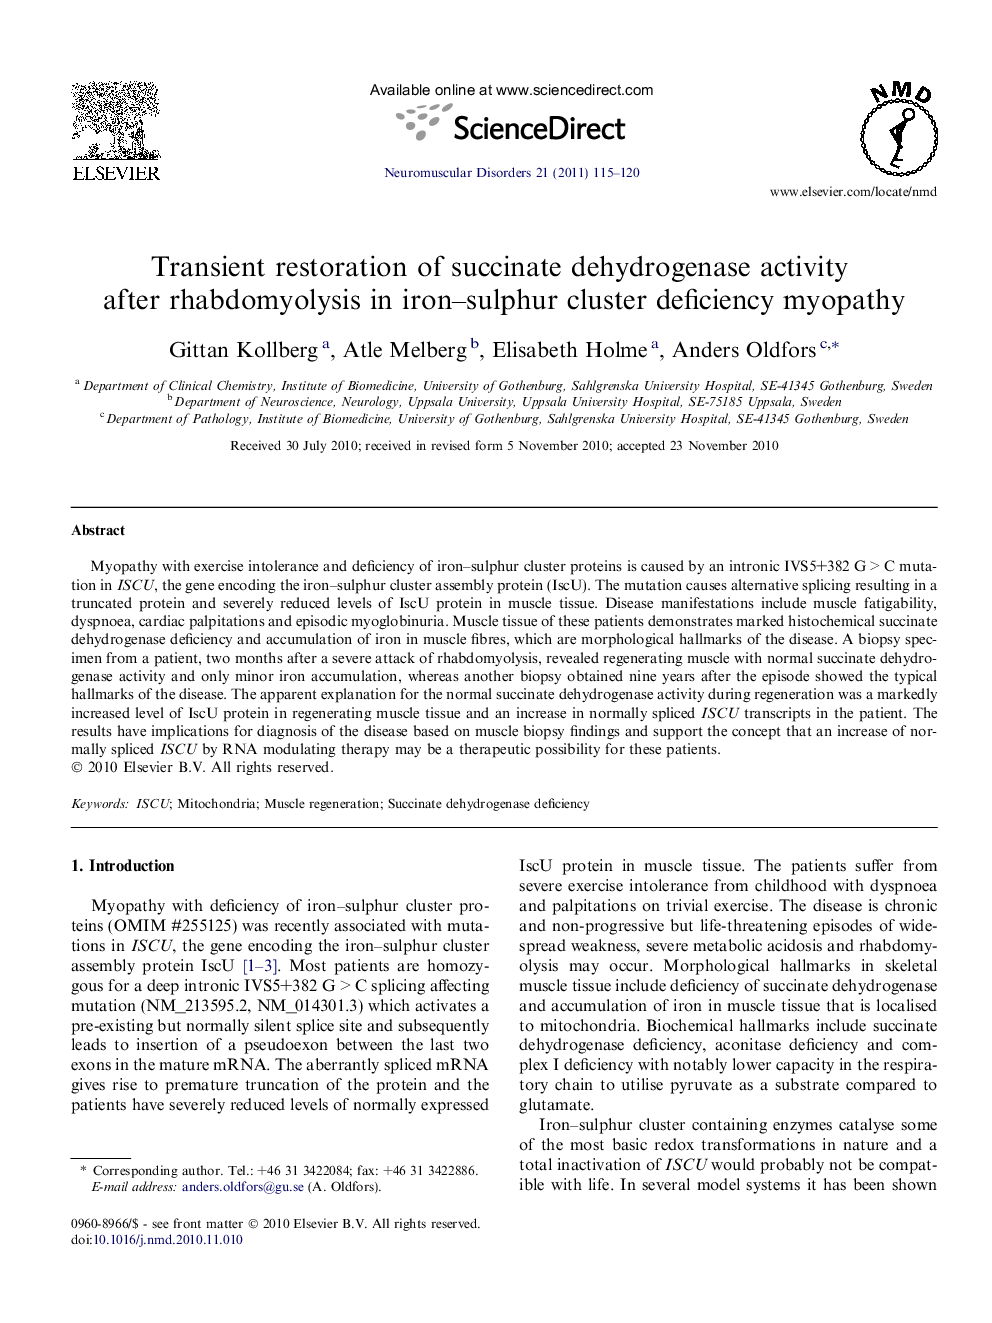 Transient restoration of succinate dehydrogenase activity after rhabdomyolysis in iron-sulphur cluster deficiency myopathy